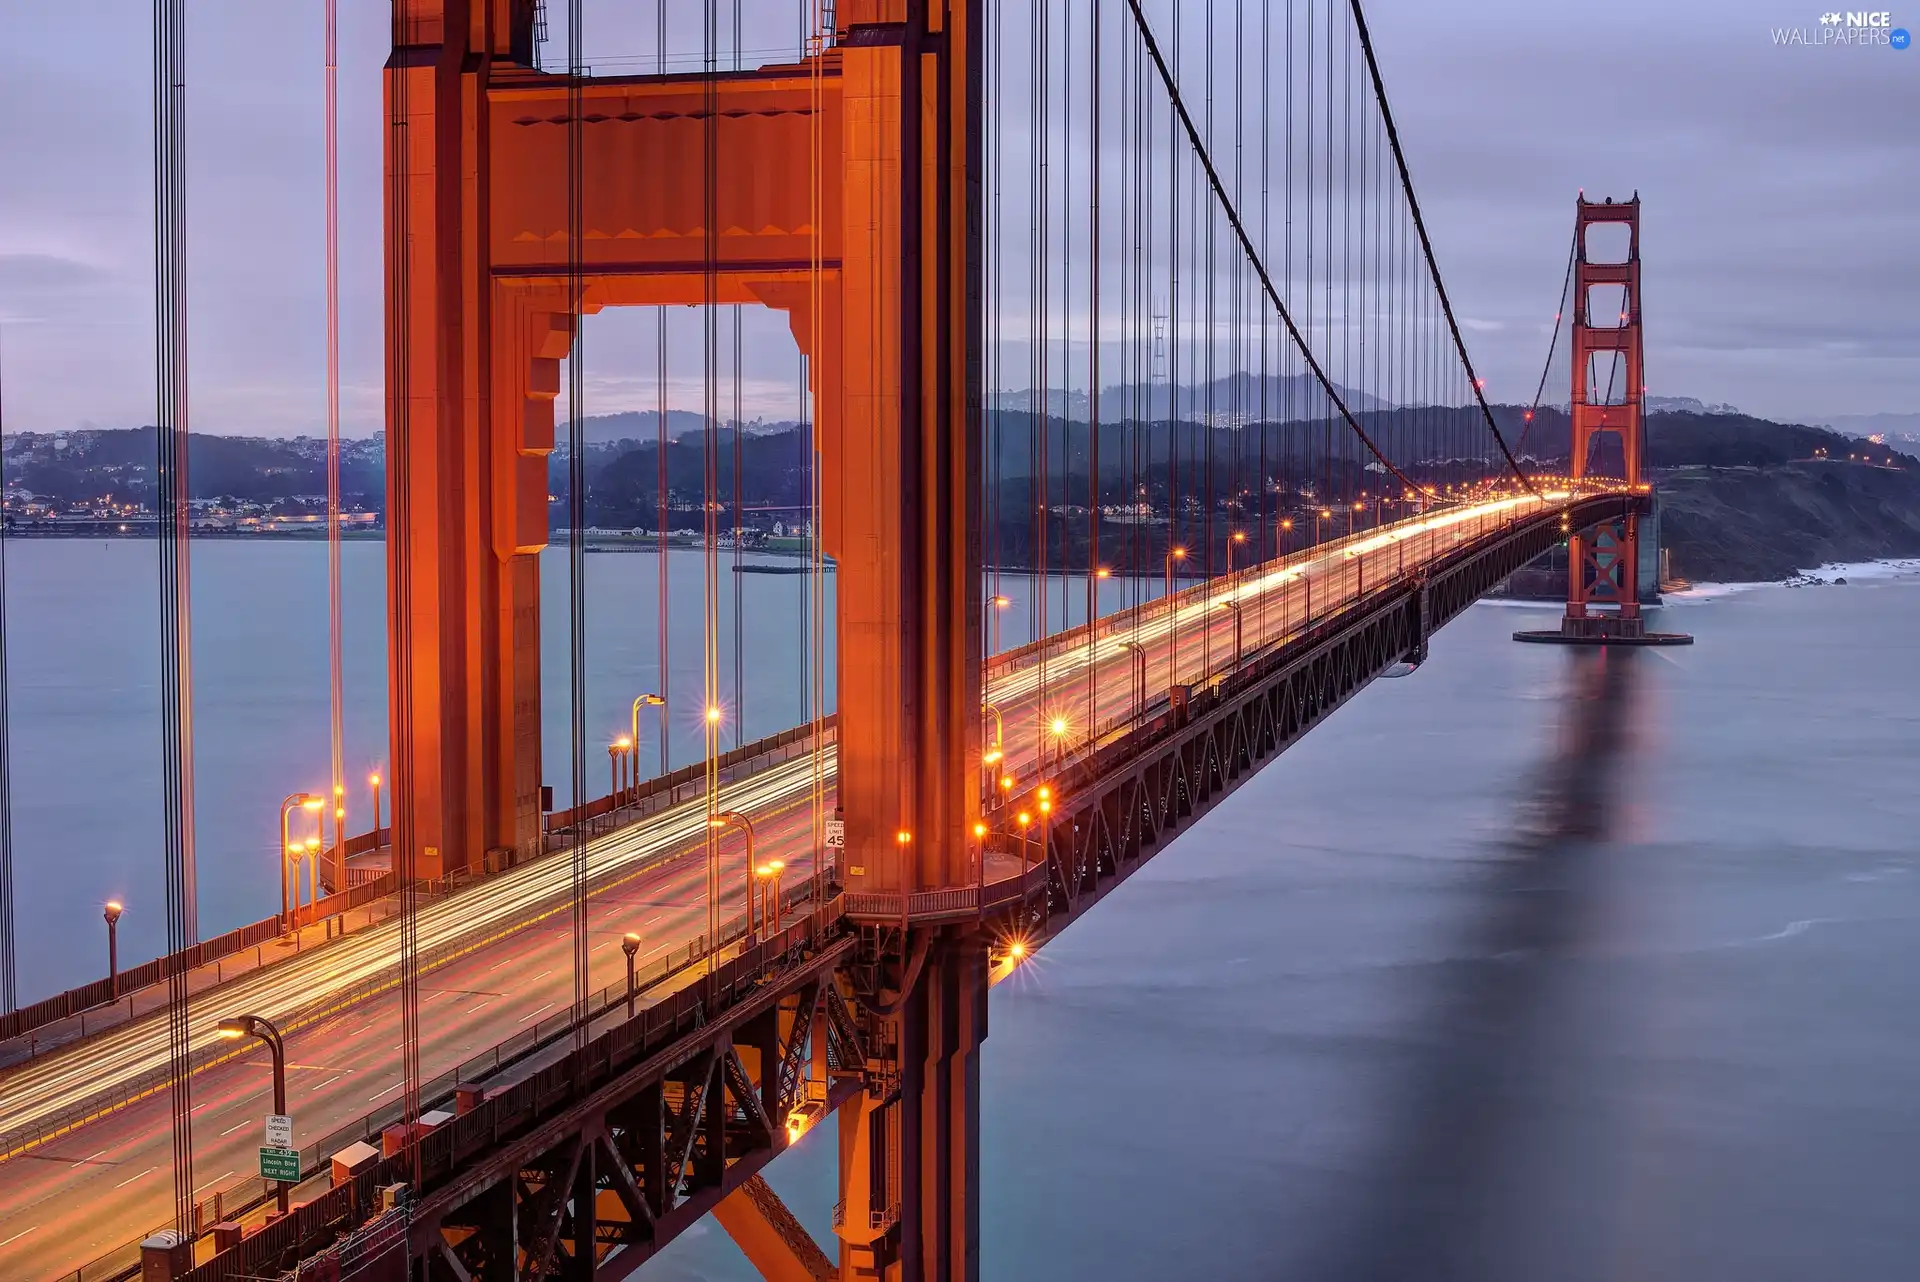 State of California, The United States, Most Golden Gate Bridge, Golden Gate Strait, San Francisco